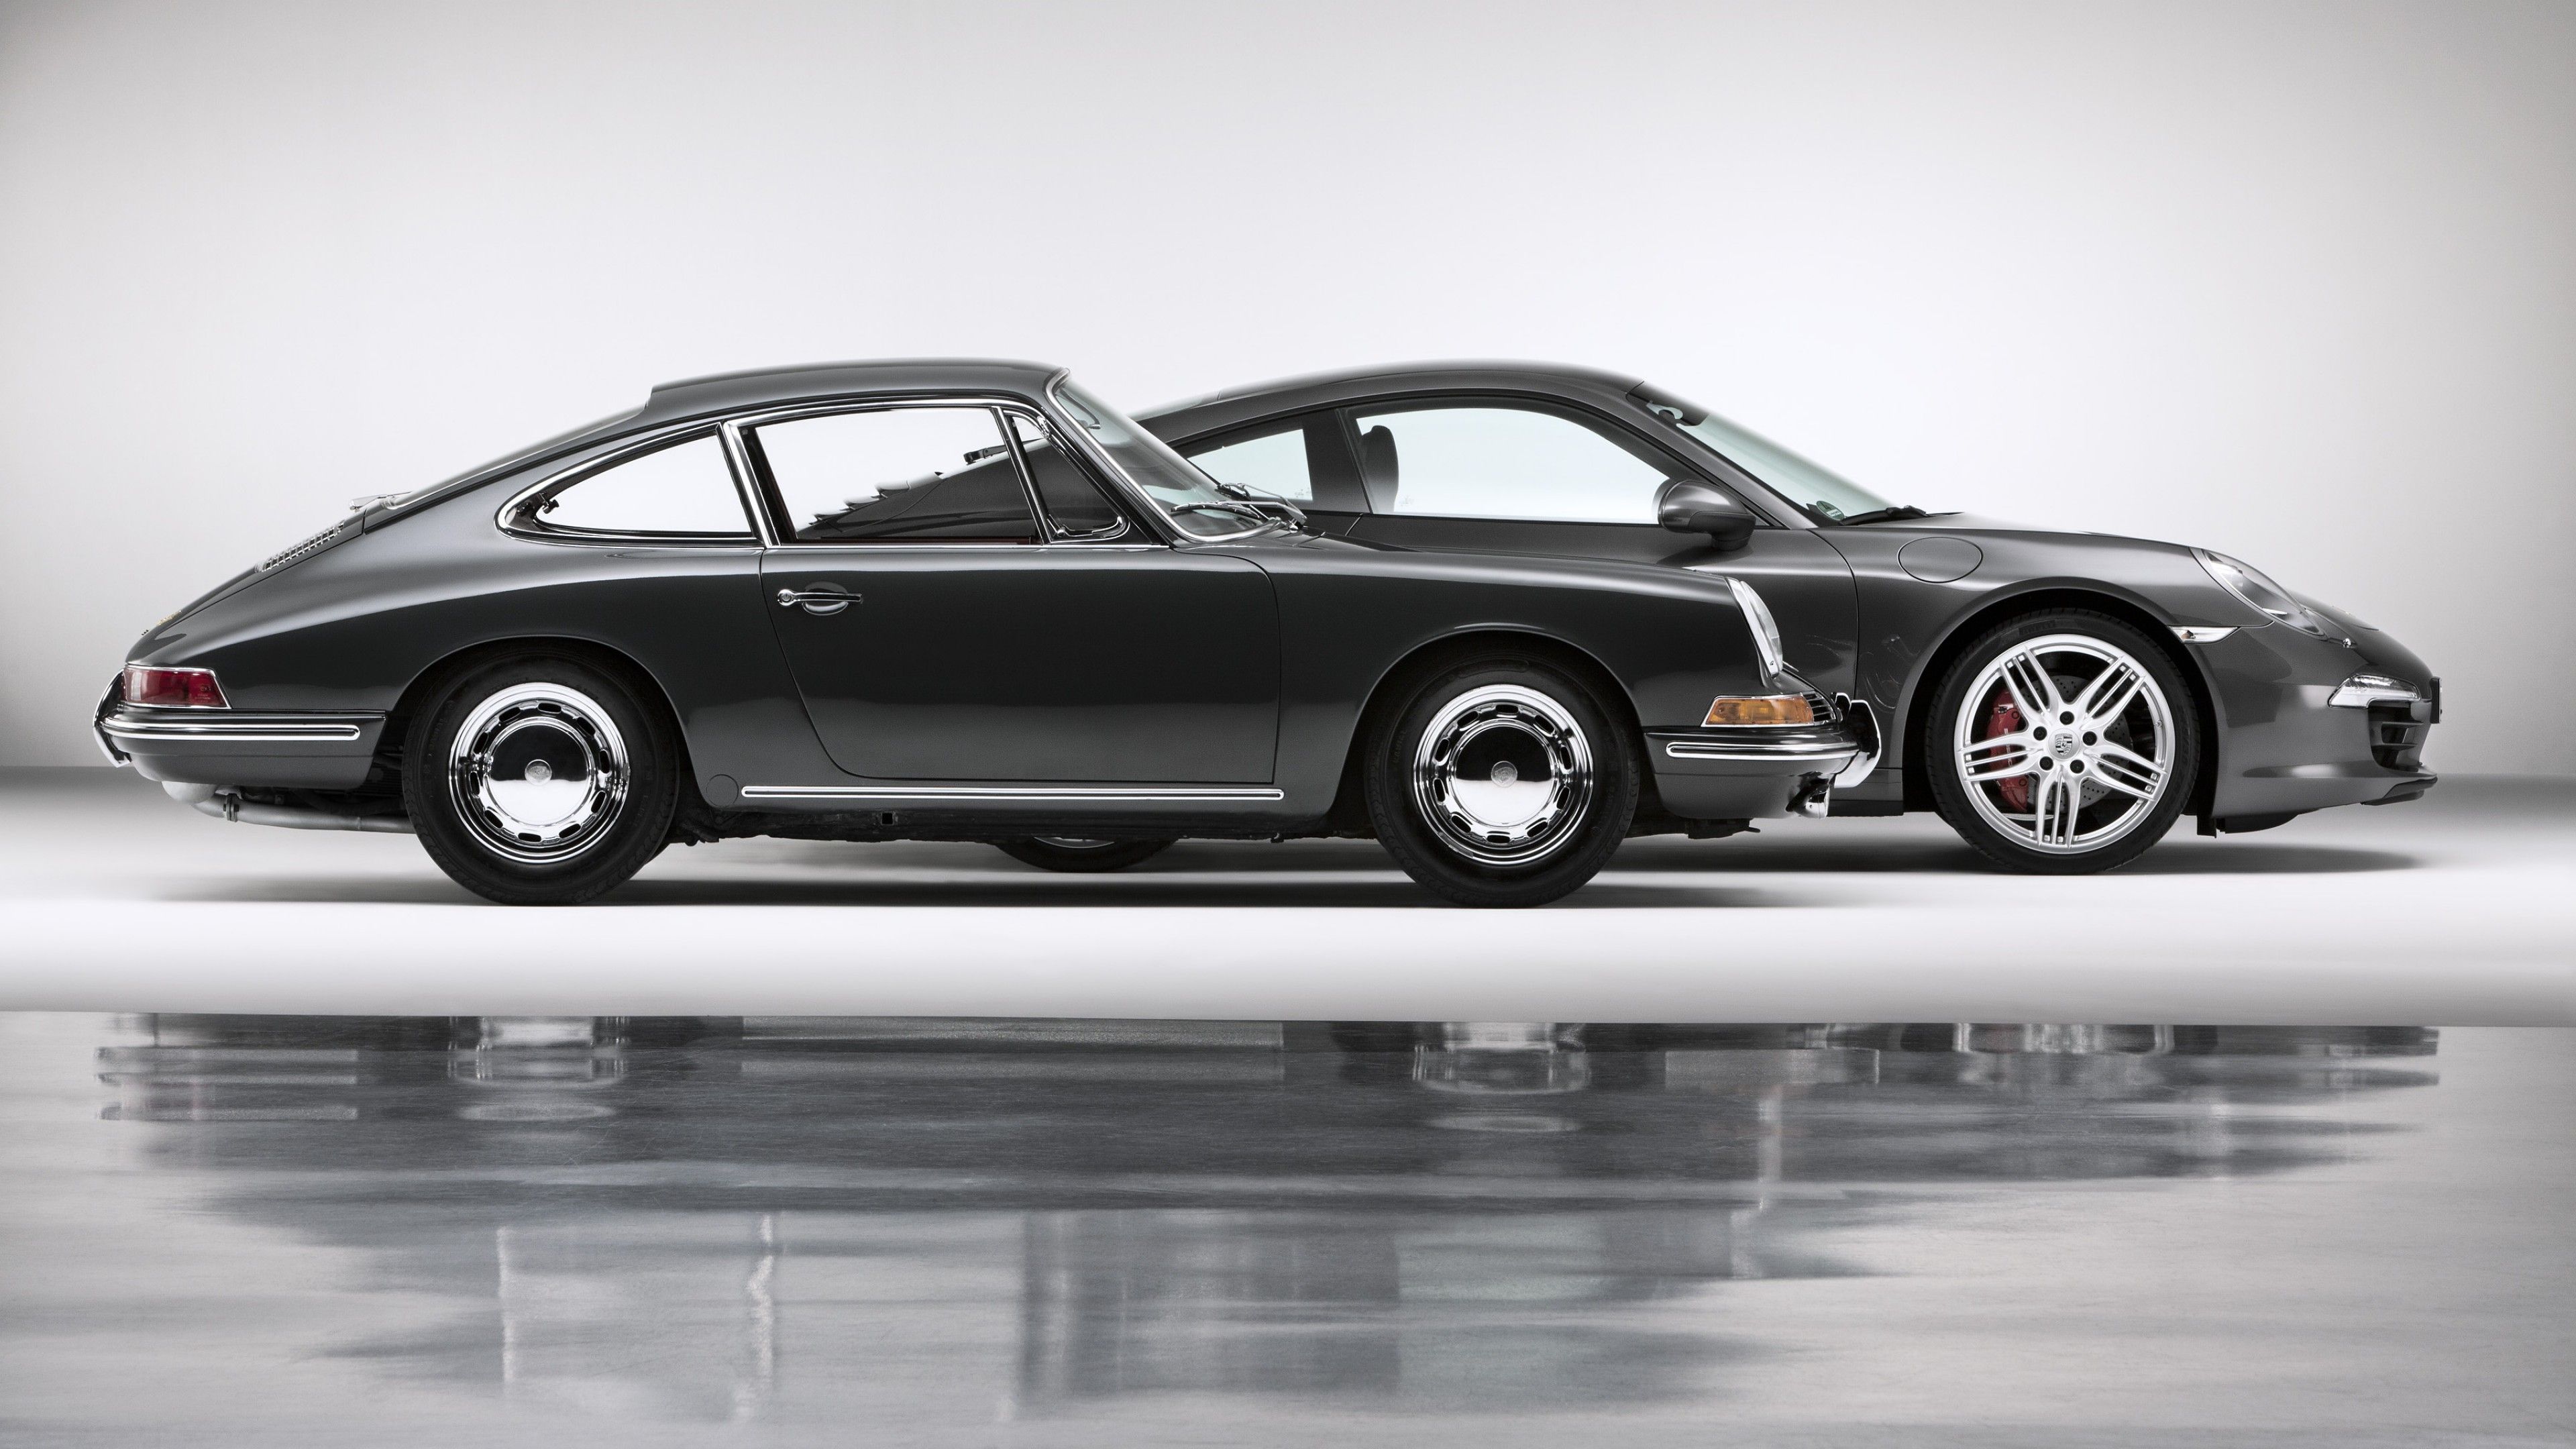 Wallpaper Porsche GT GT sports car, luxury cars, classic cars, review, test drive, Cars & Bikes